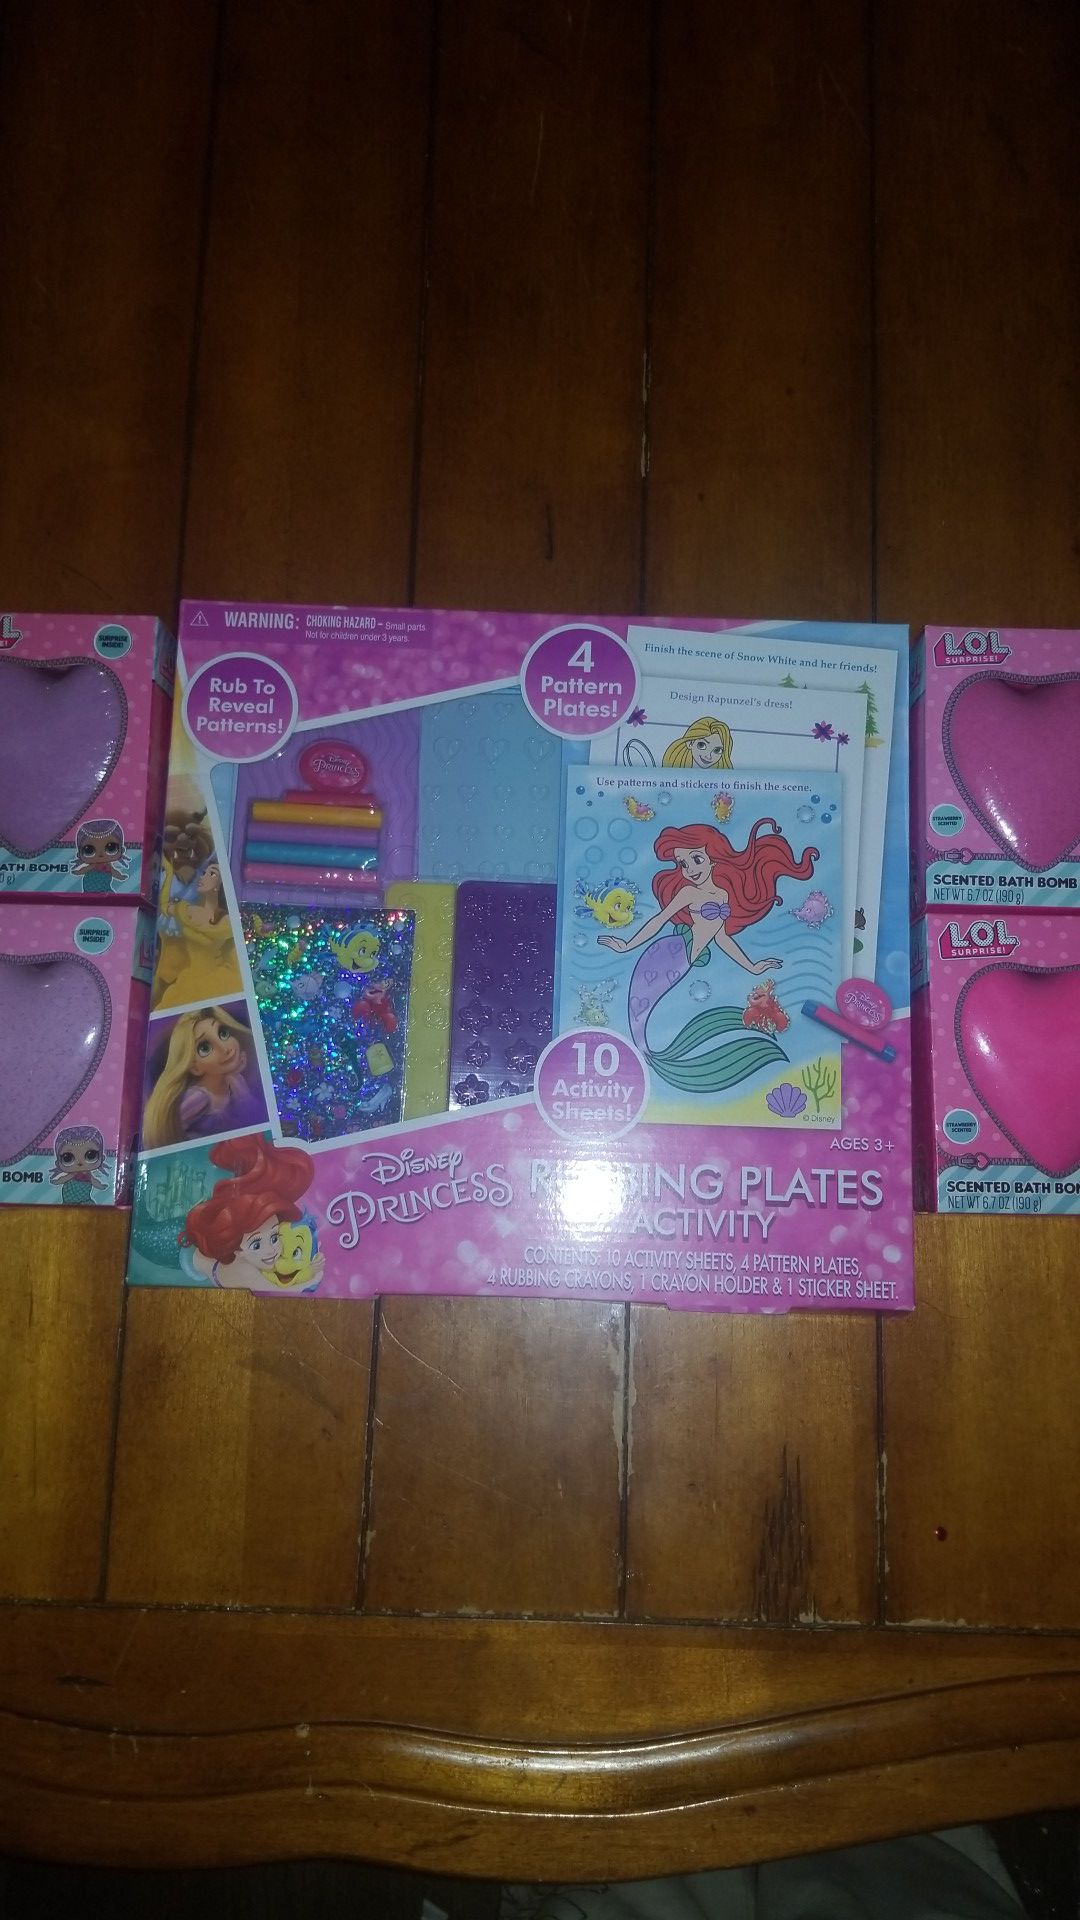 New girls Disney Little Mermaid craft art kit toy LOL bath bombs with surprises inside birthday gift Easter basket filler